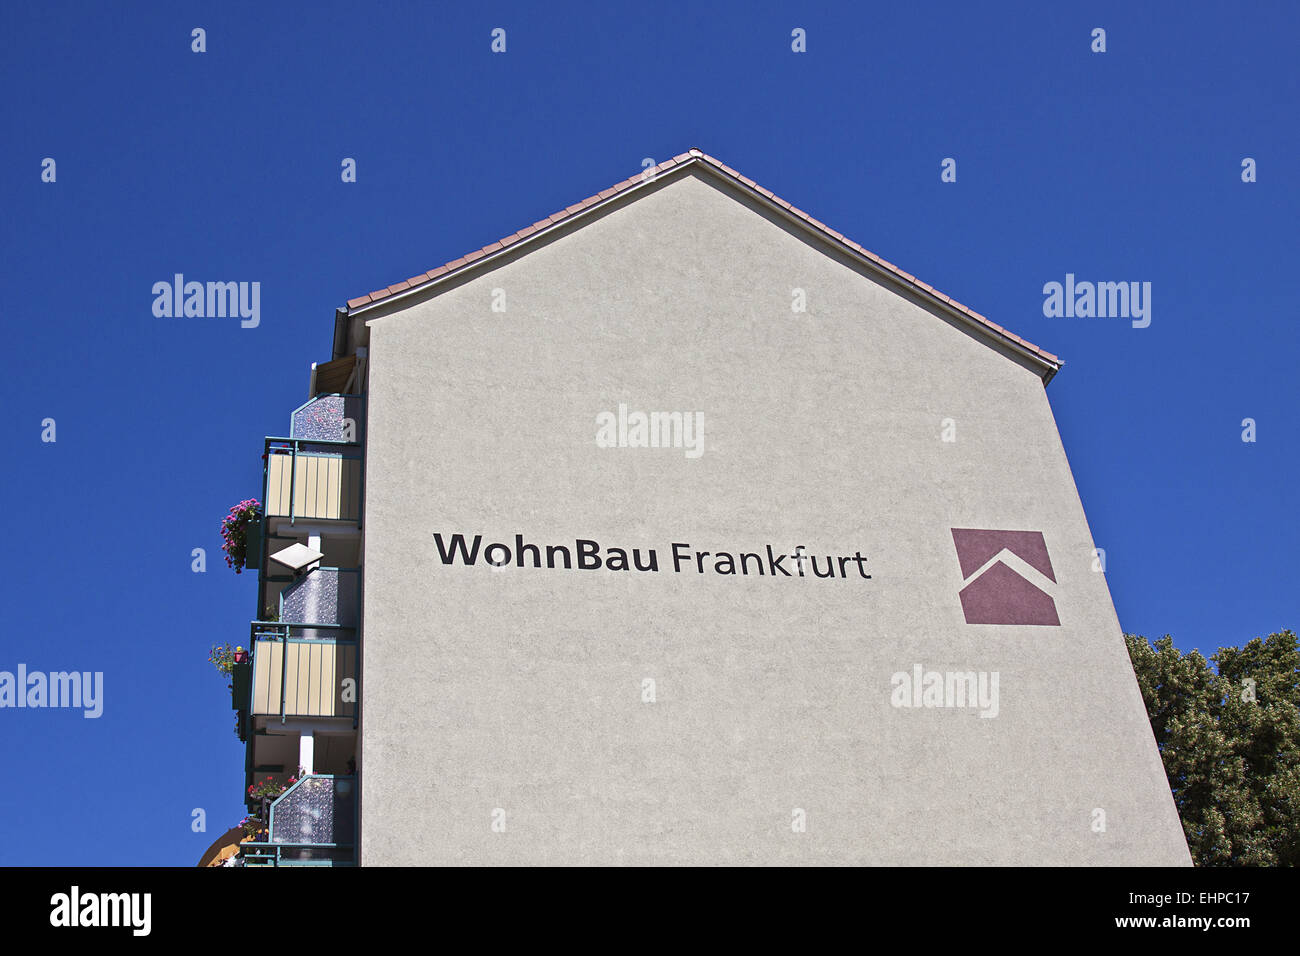 WohnBau Frankfurt Stock Photo